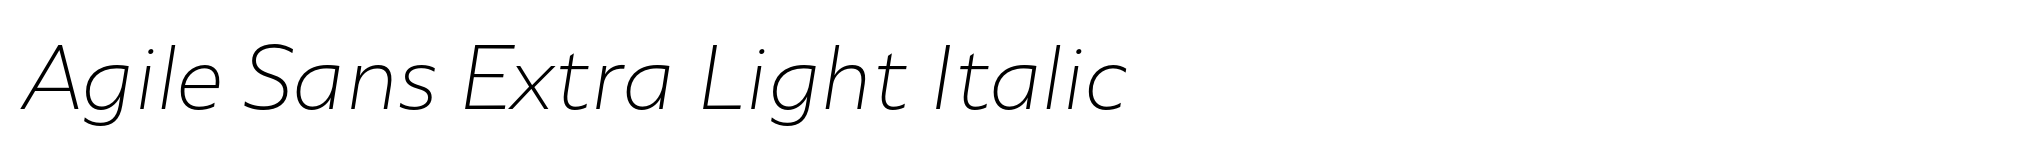 Agile Sans Extra Light Italic image